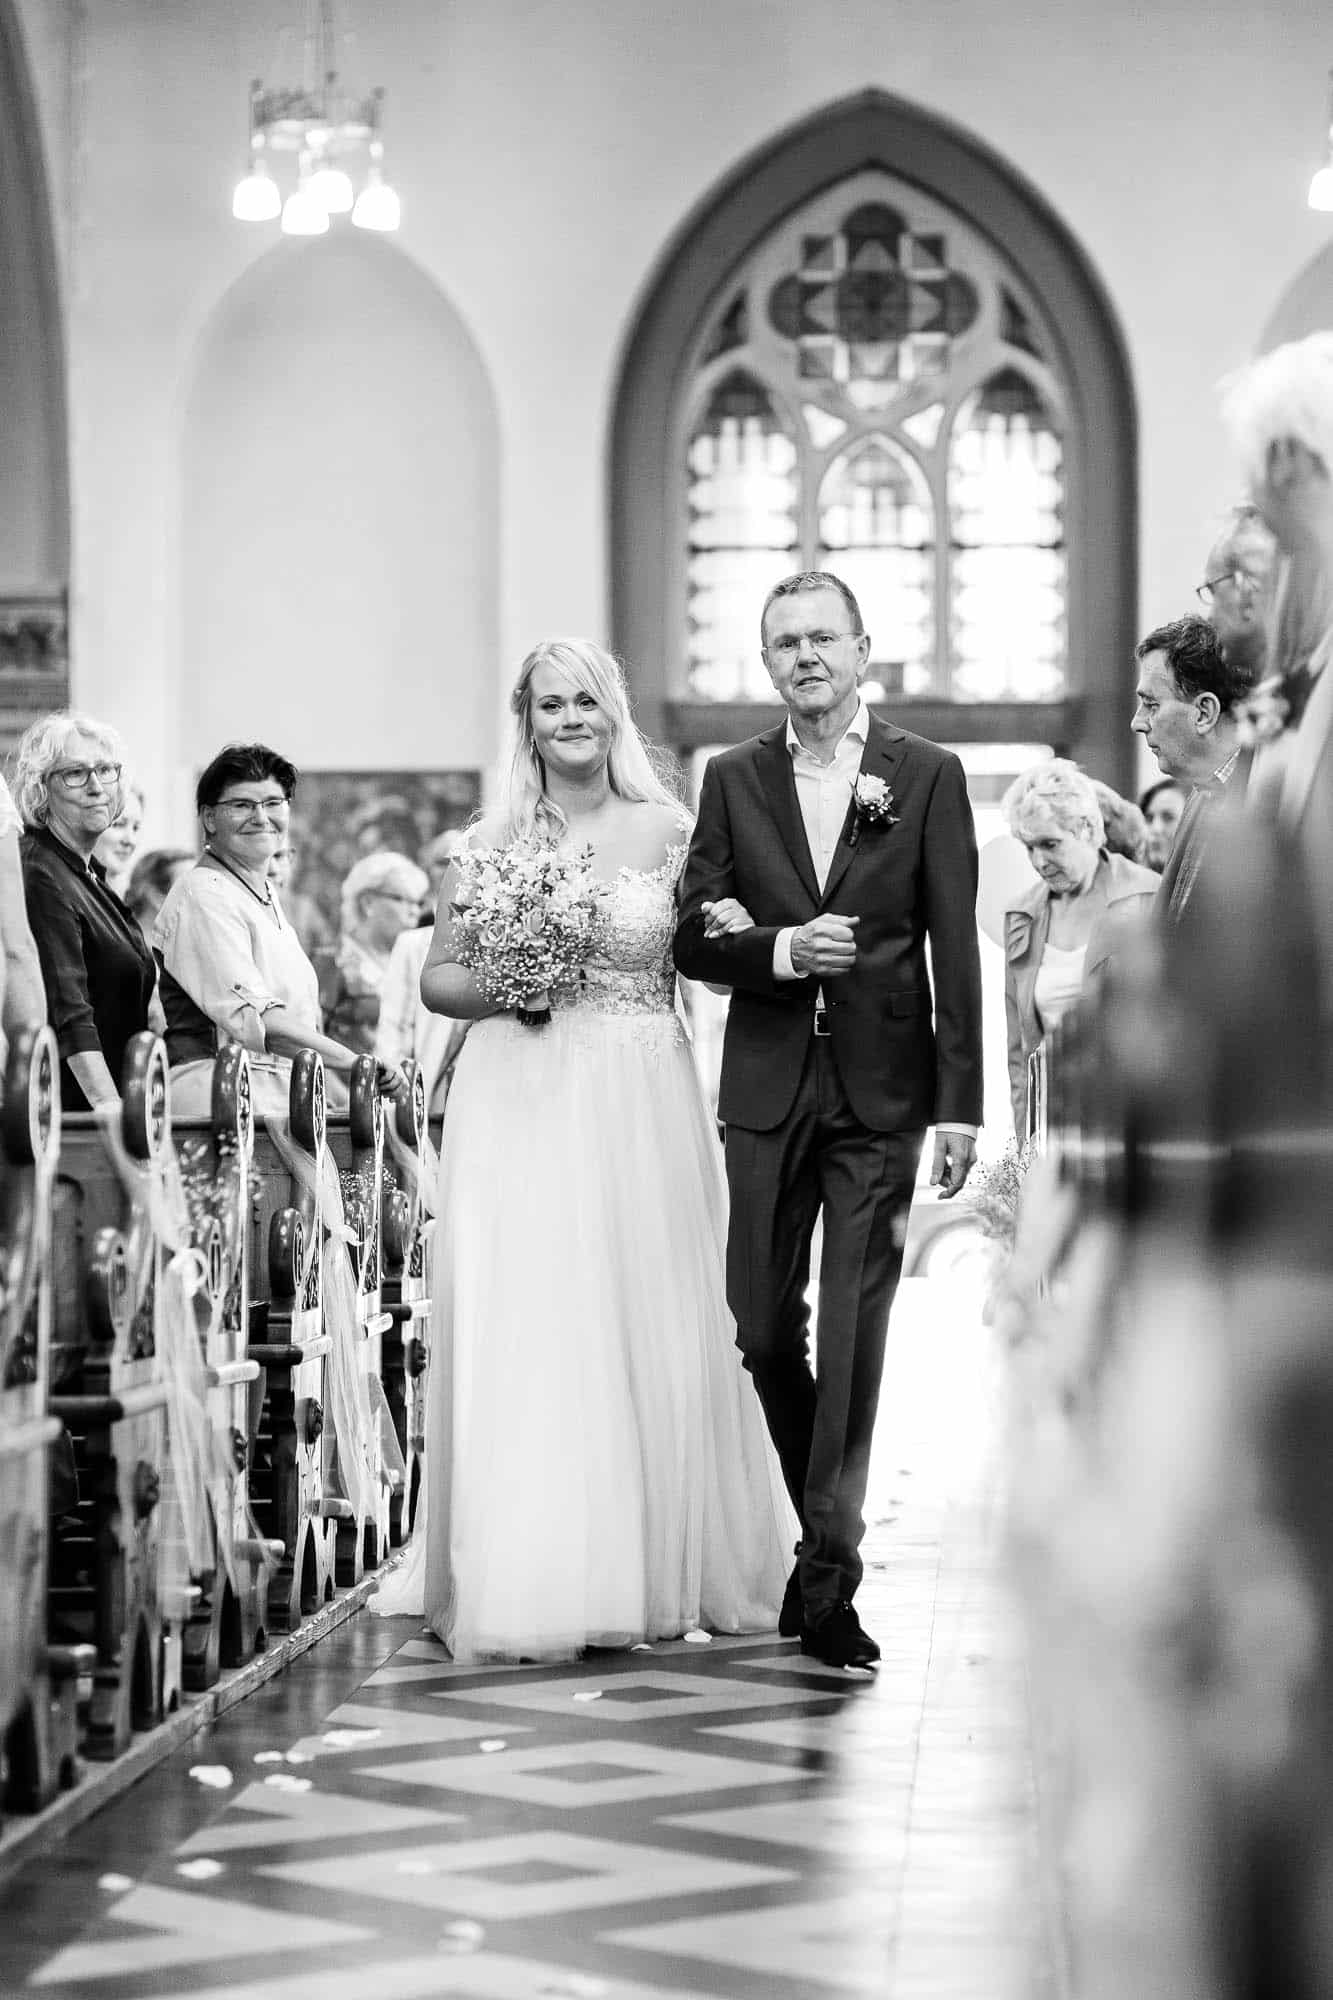 A bride and groom walk down the aisle of a church.